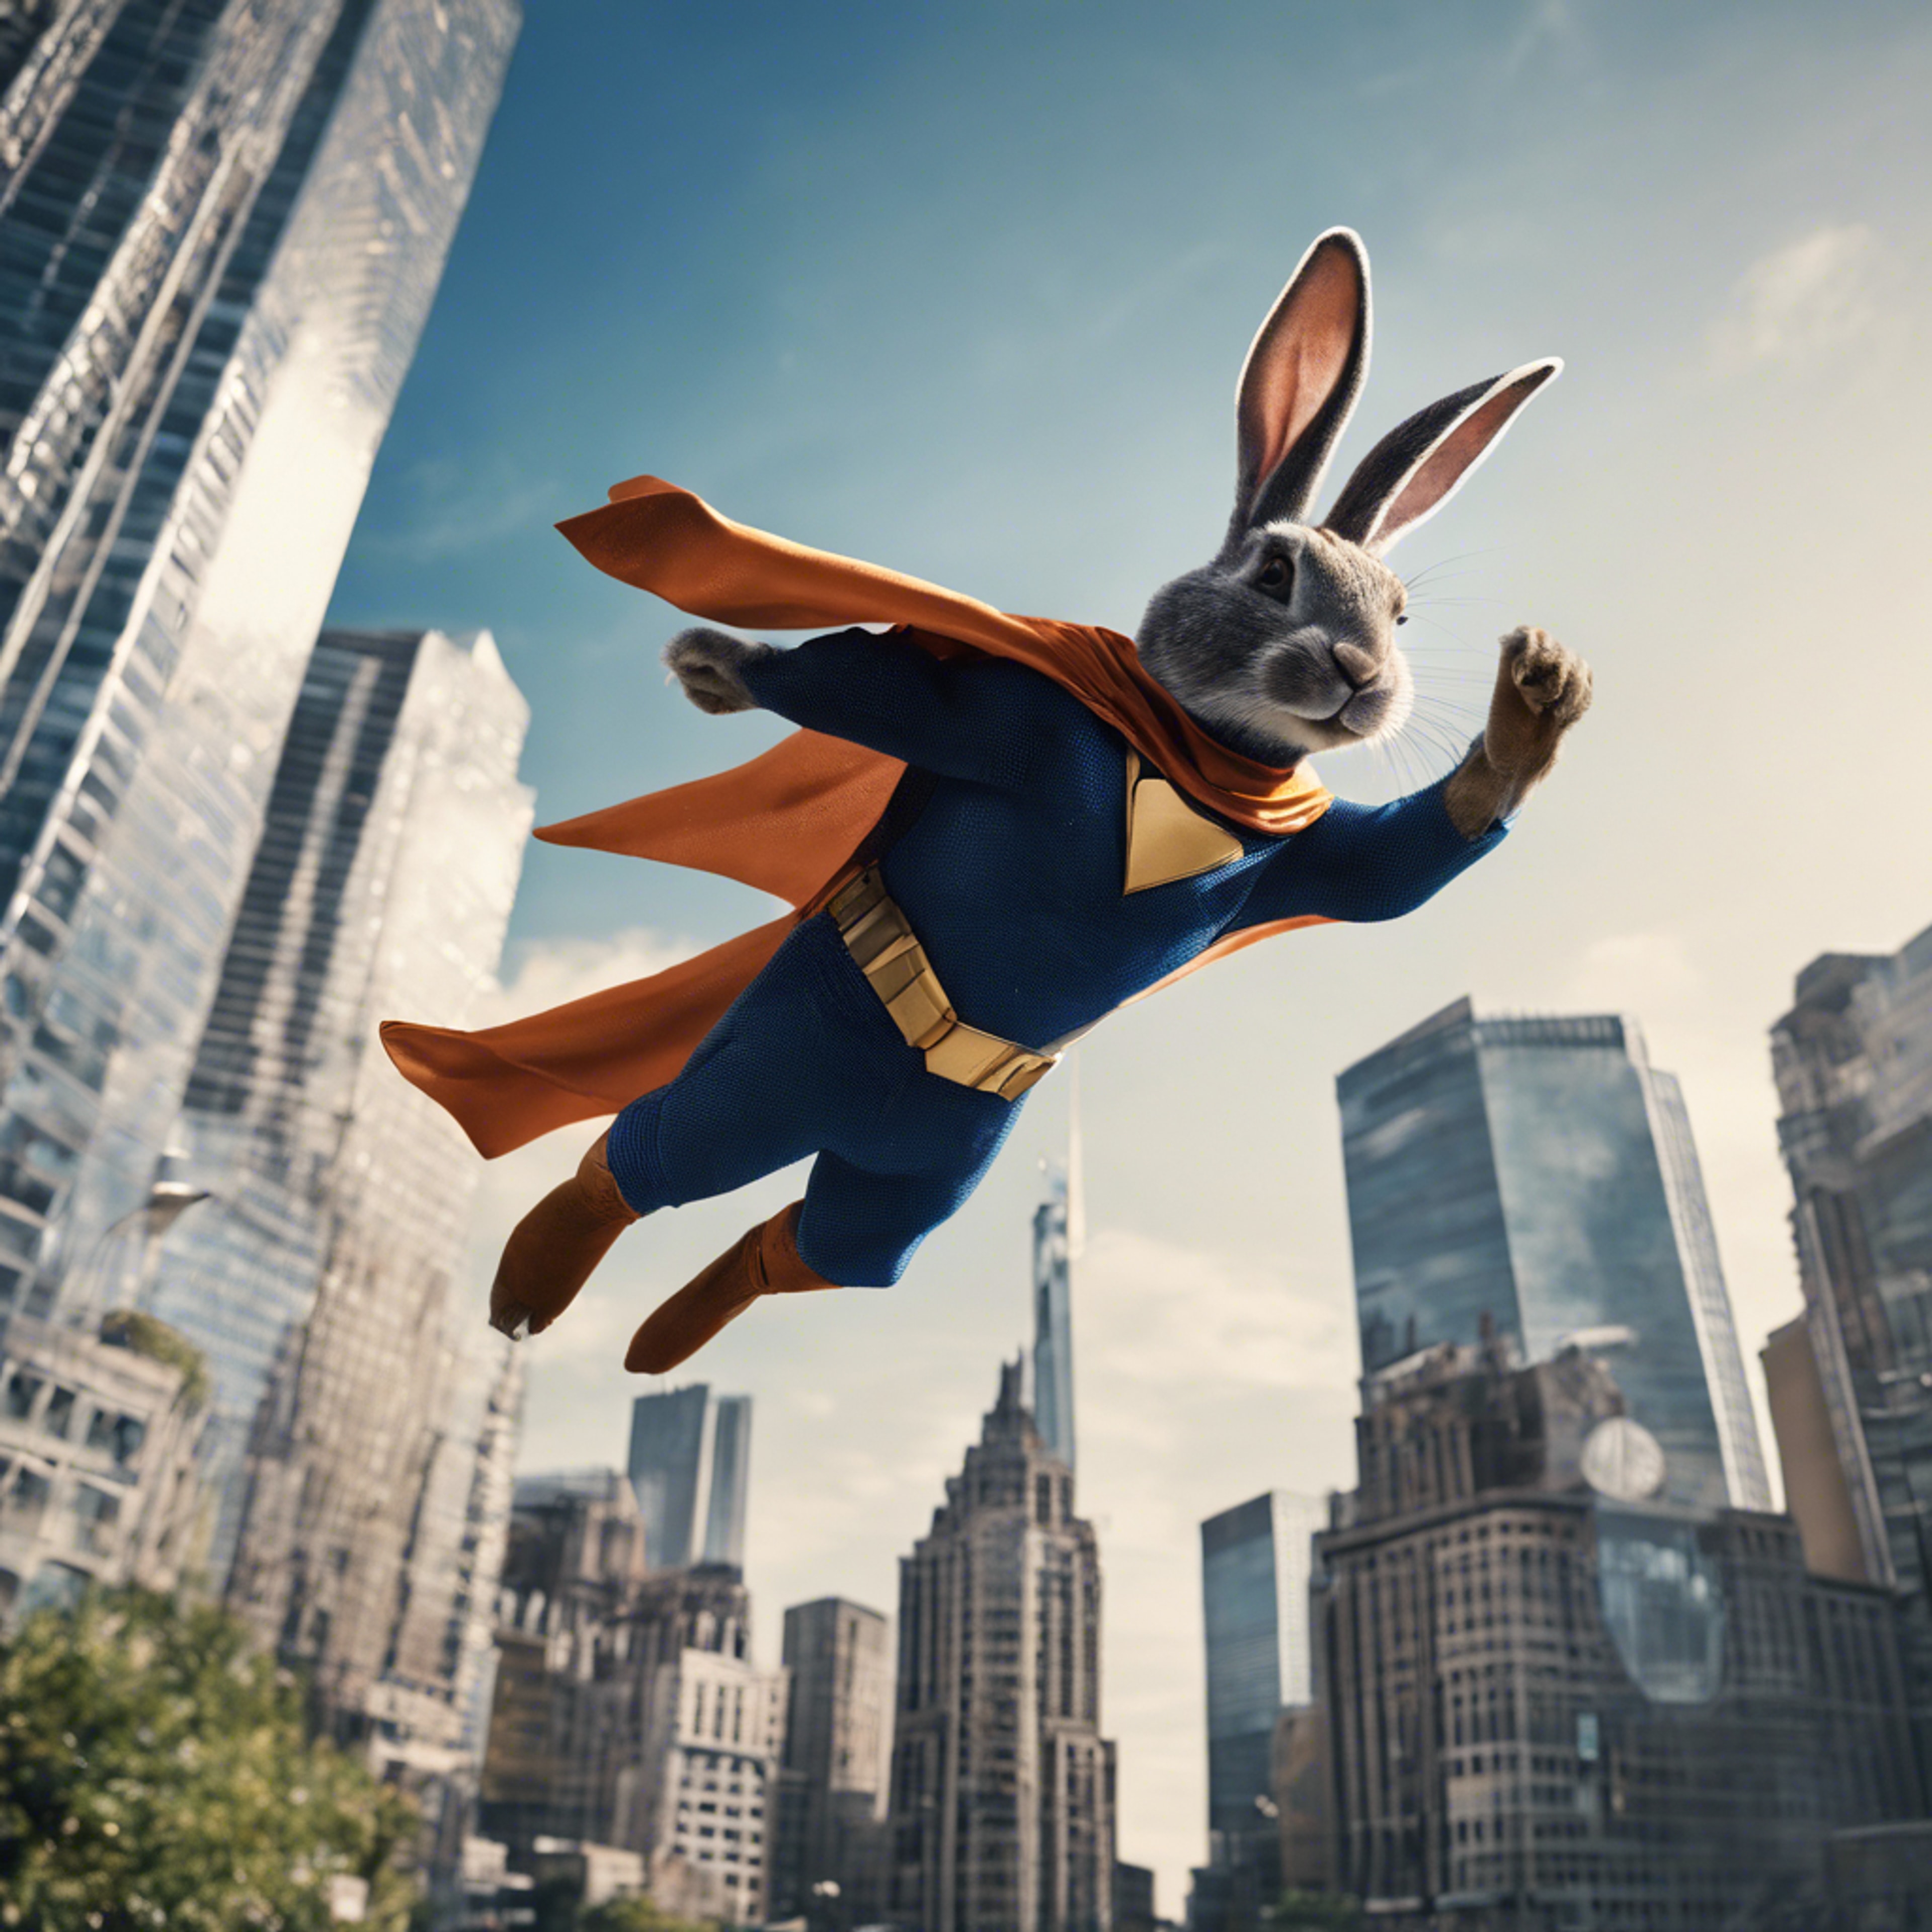 A rabbit superhero soaring above skyscrapers in a bustling city. Papel de parede[841b91138e24419cbc55]